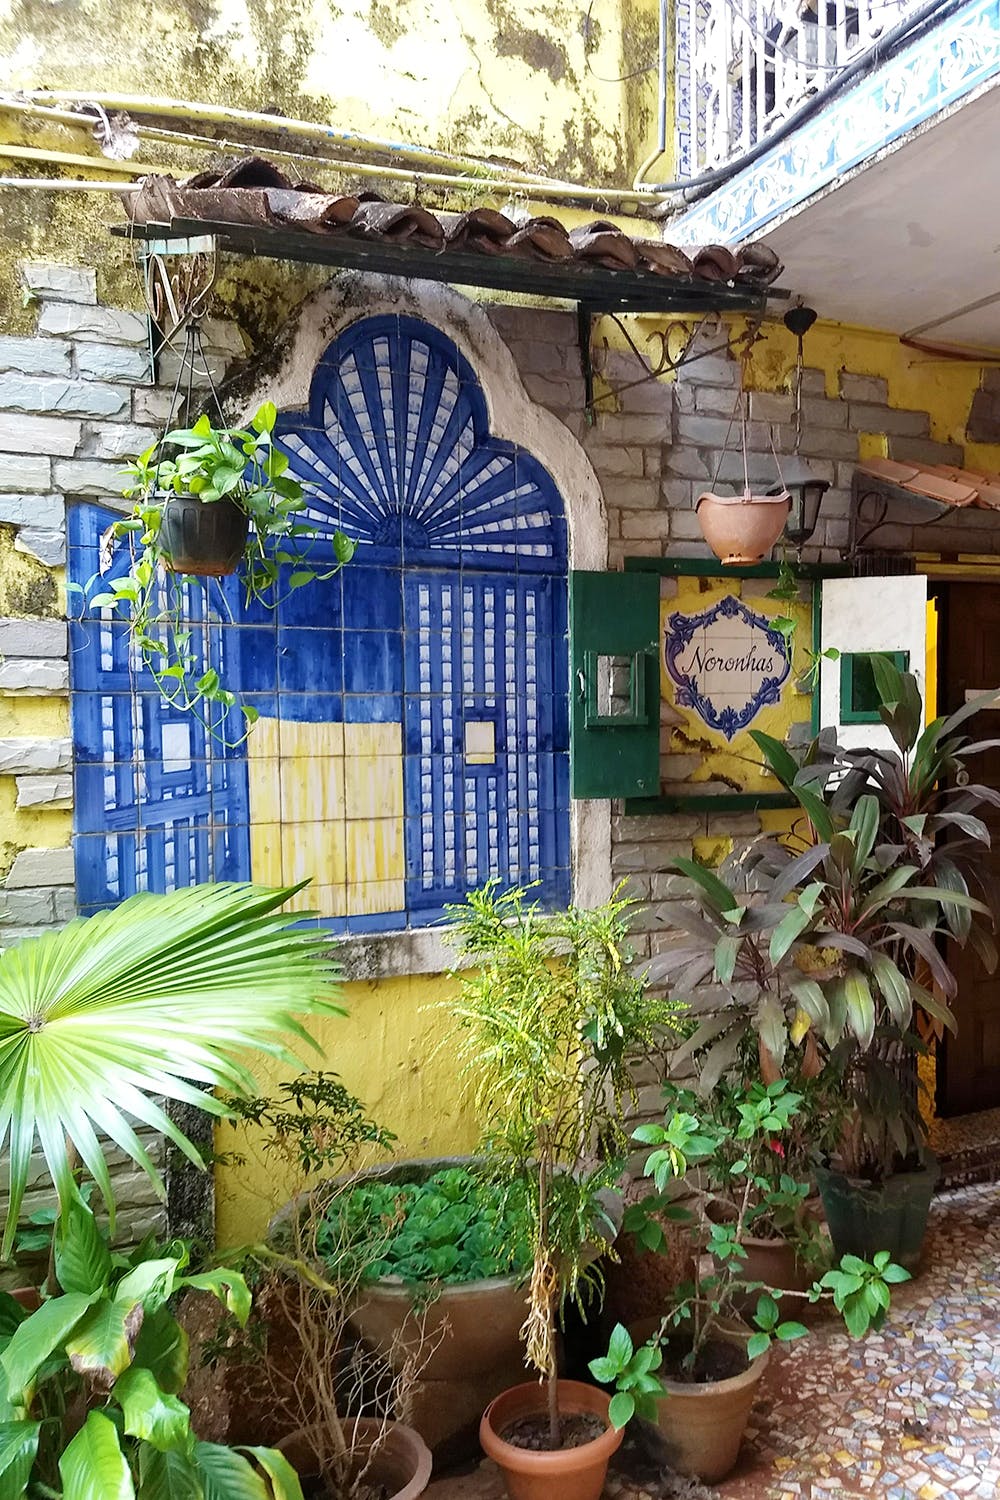 A P Fernandes in Old Goa,Goa - Best Gift Shops in Goa - Justdial